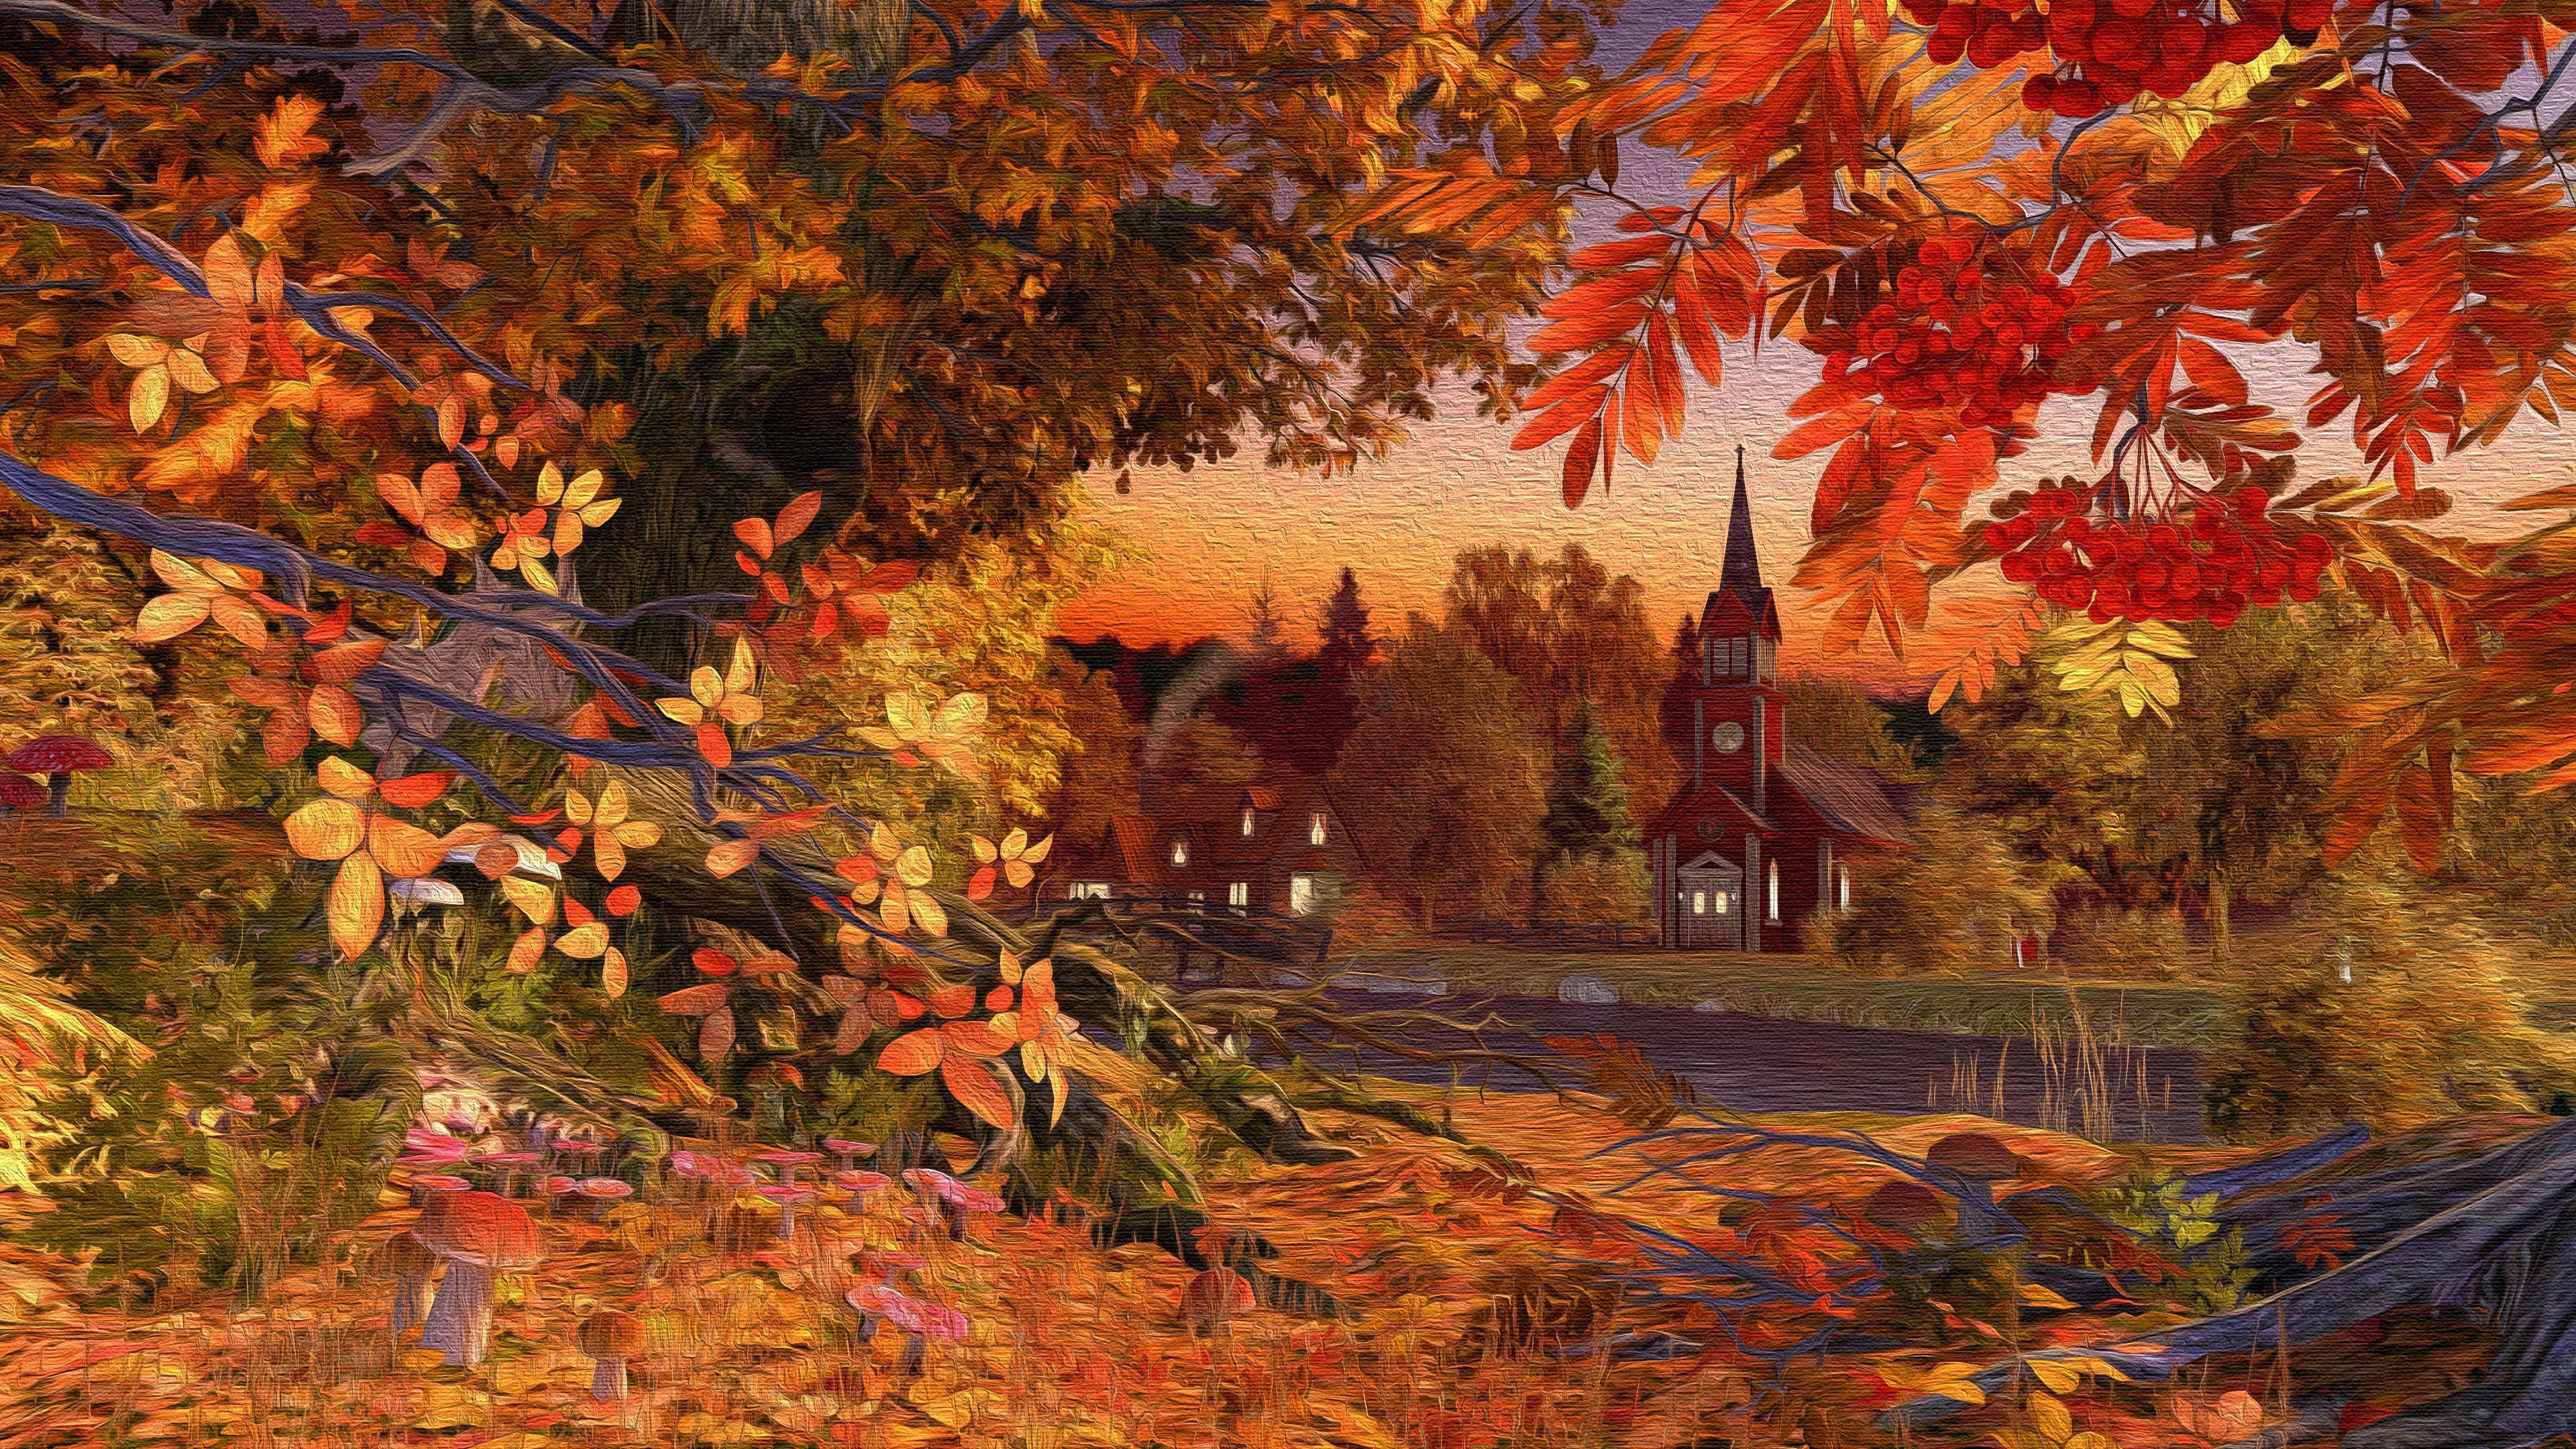 Autumn on Canvas 4k Ultra HD Wallpaper. Background